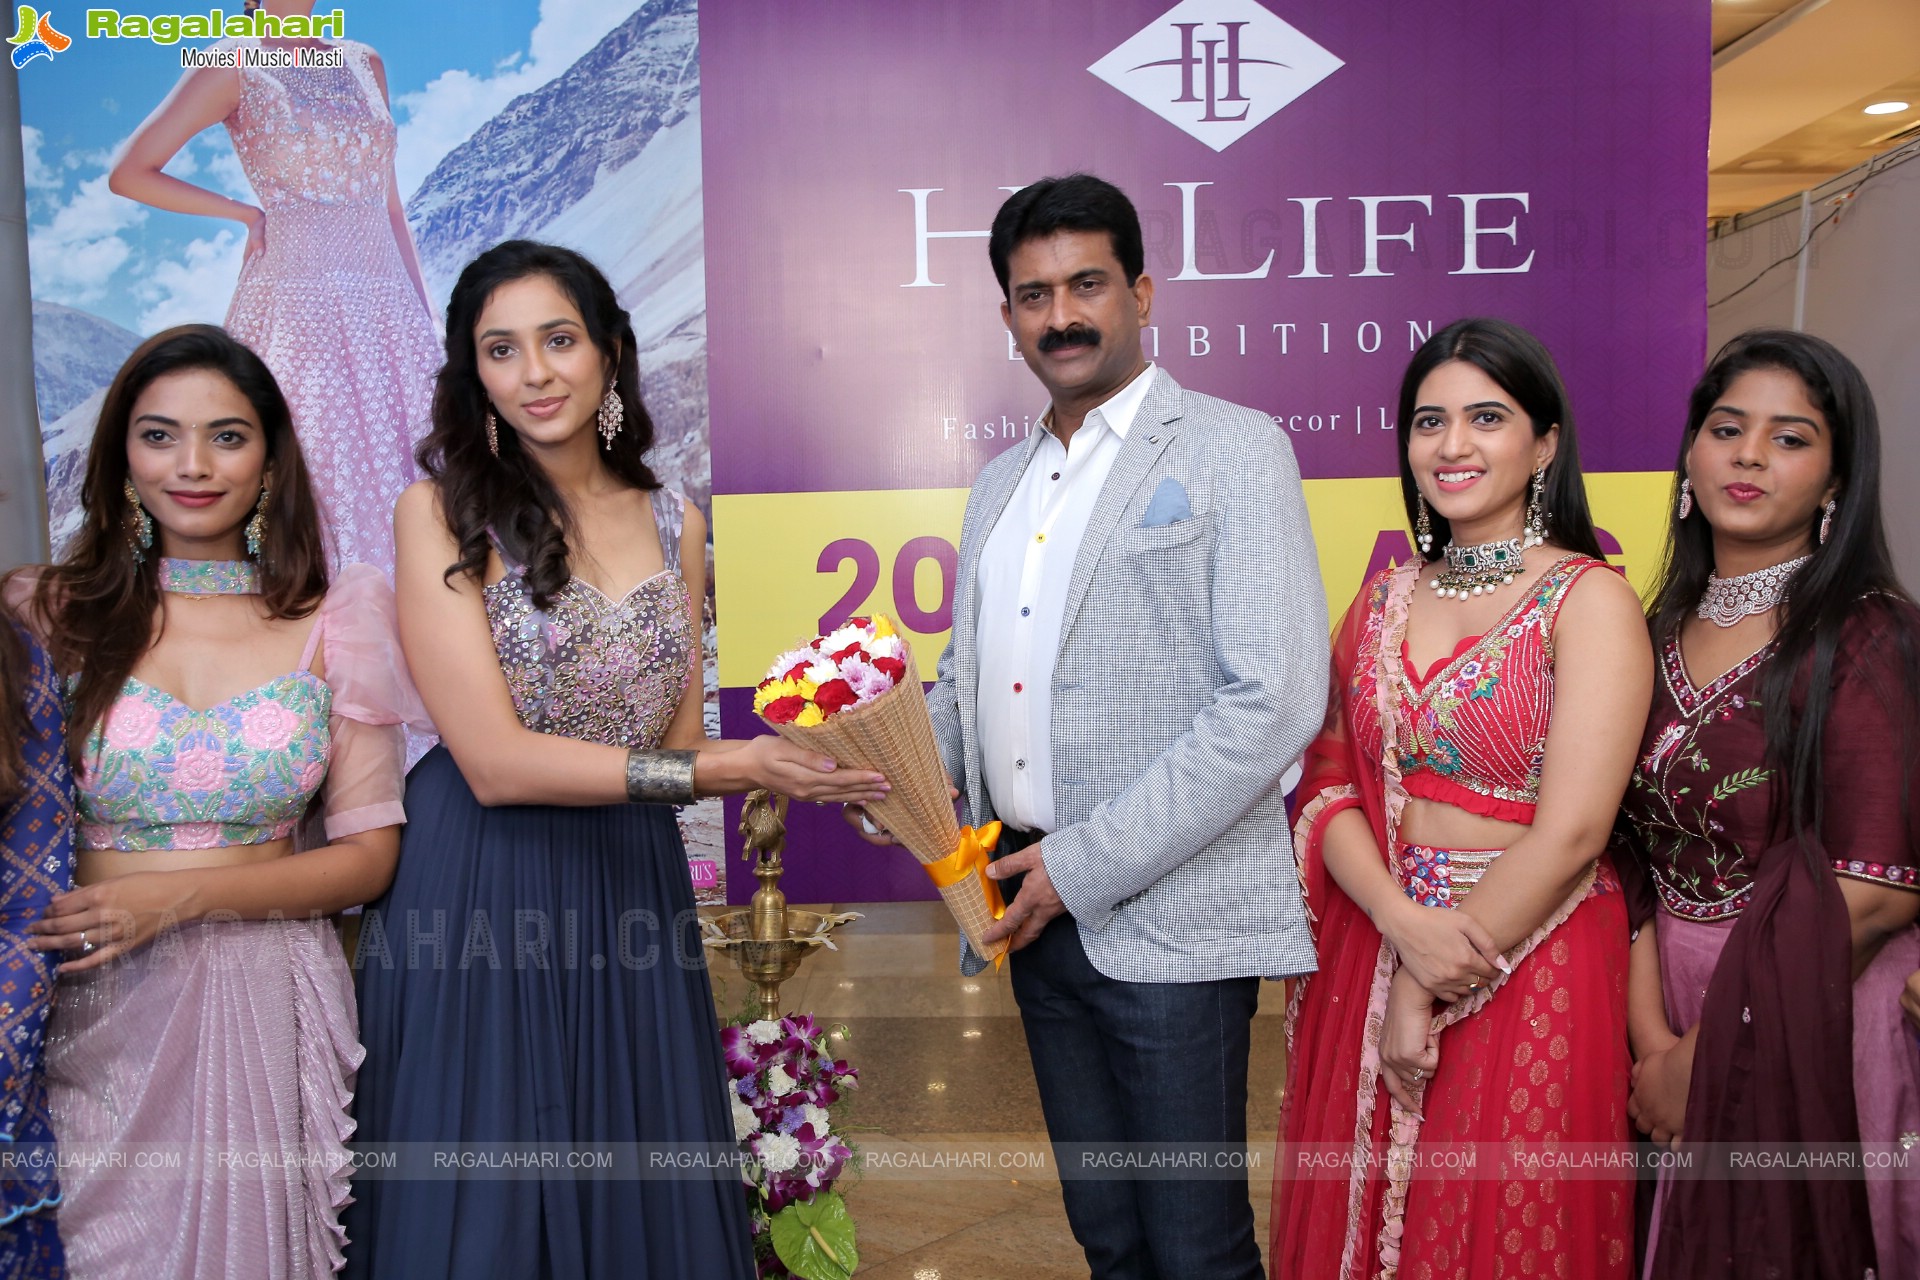 Hi Life Exhibition August 2022 Kicks Off at HICC-Novotel, Hyderabad